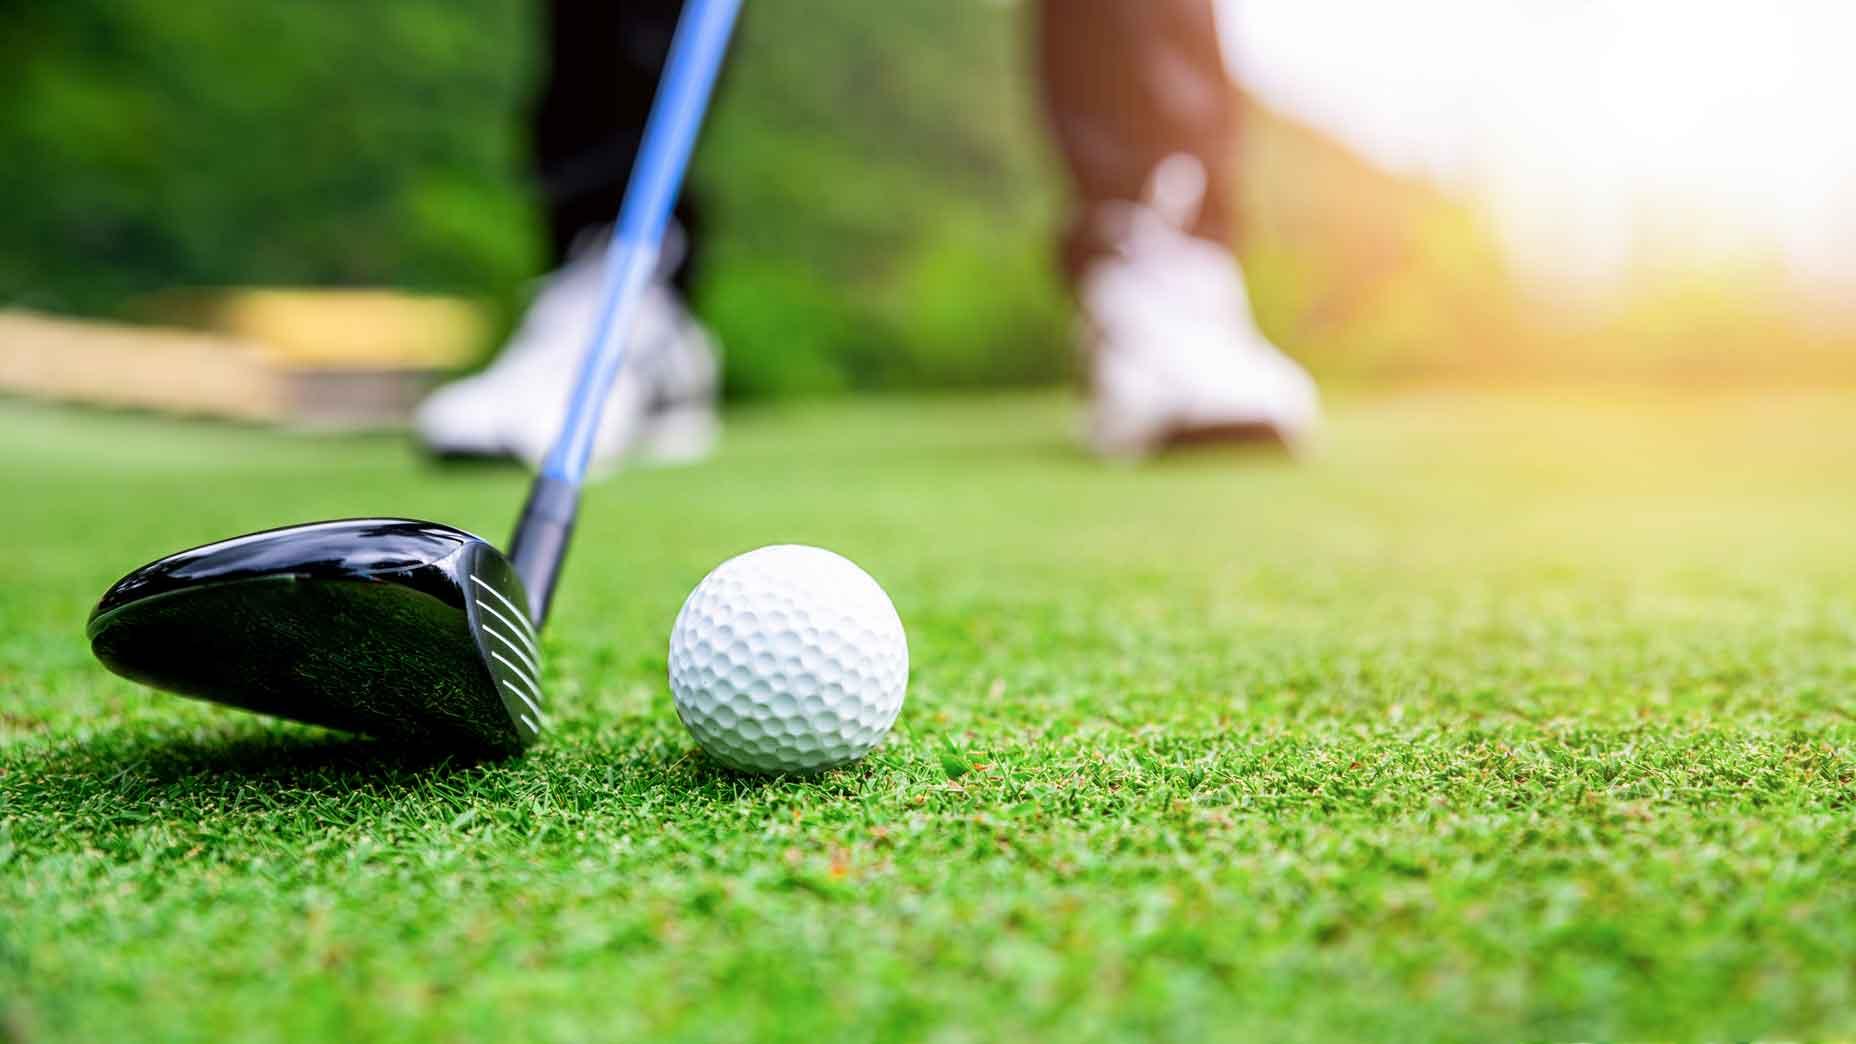 SFLHIMSS 11th Annual Golf Tournament & Scholarship Fundraiser